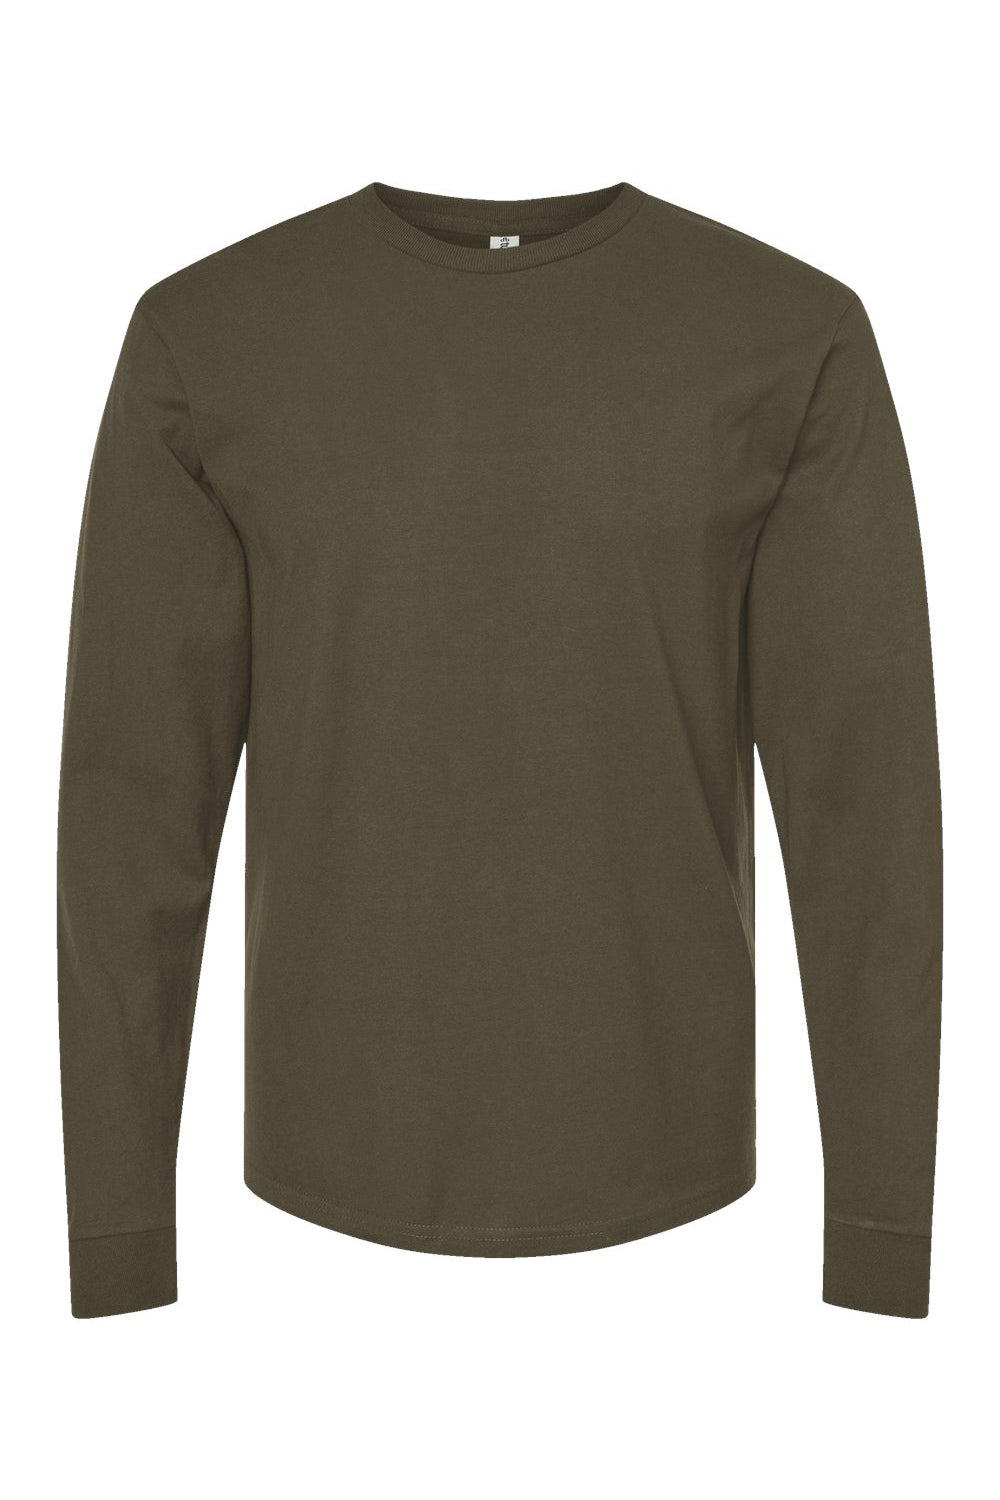 Tultex 291 Mens Jersey Long Sleeve Crewneck T-Shirt Grape Leaf Green Flat Front